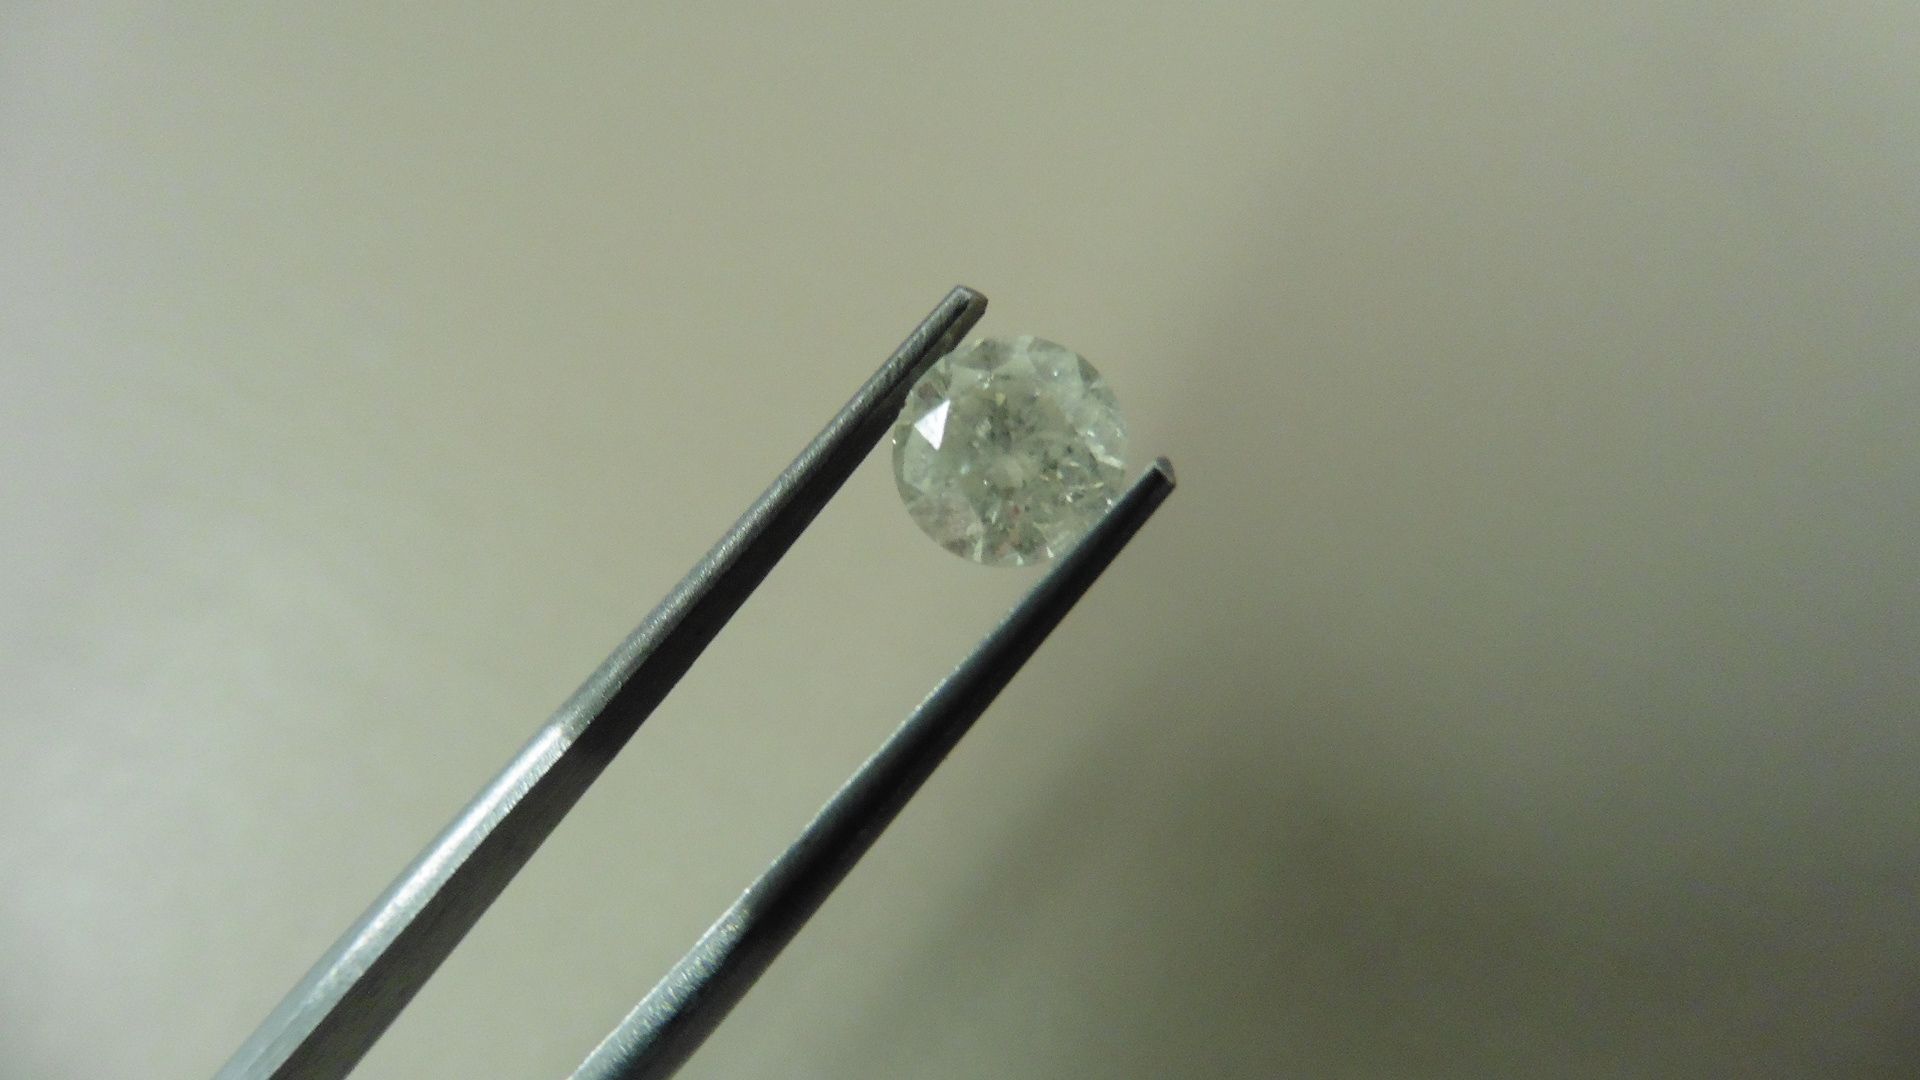 1.02ct Brilliant Cut Diamond, Enhanced stone. H colour, I1 clarity. 6.15 x 4.05mm. Valued at £